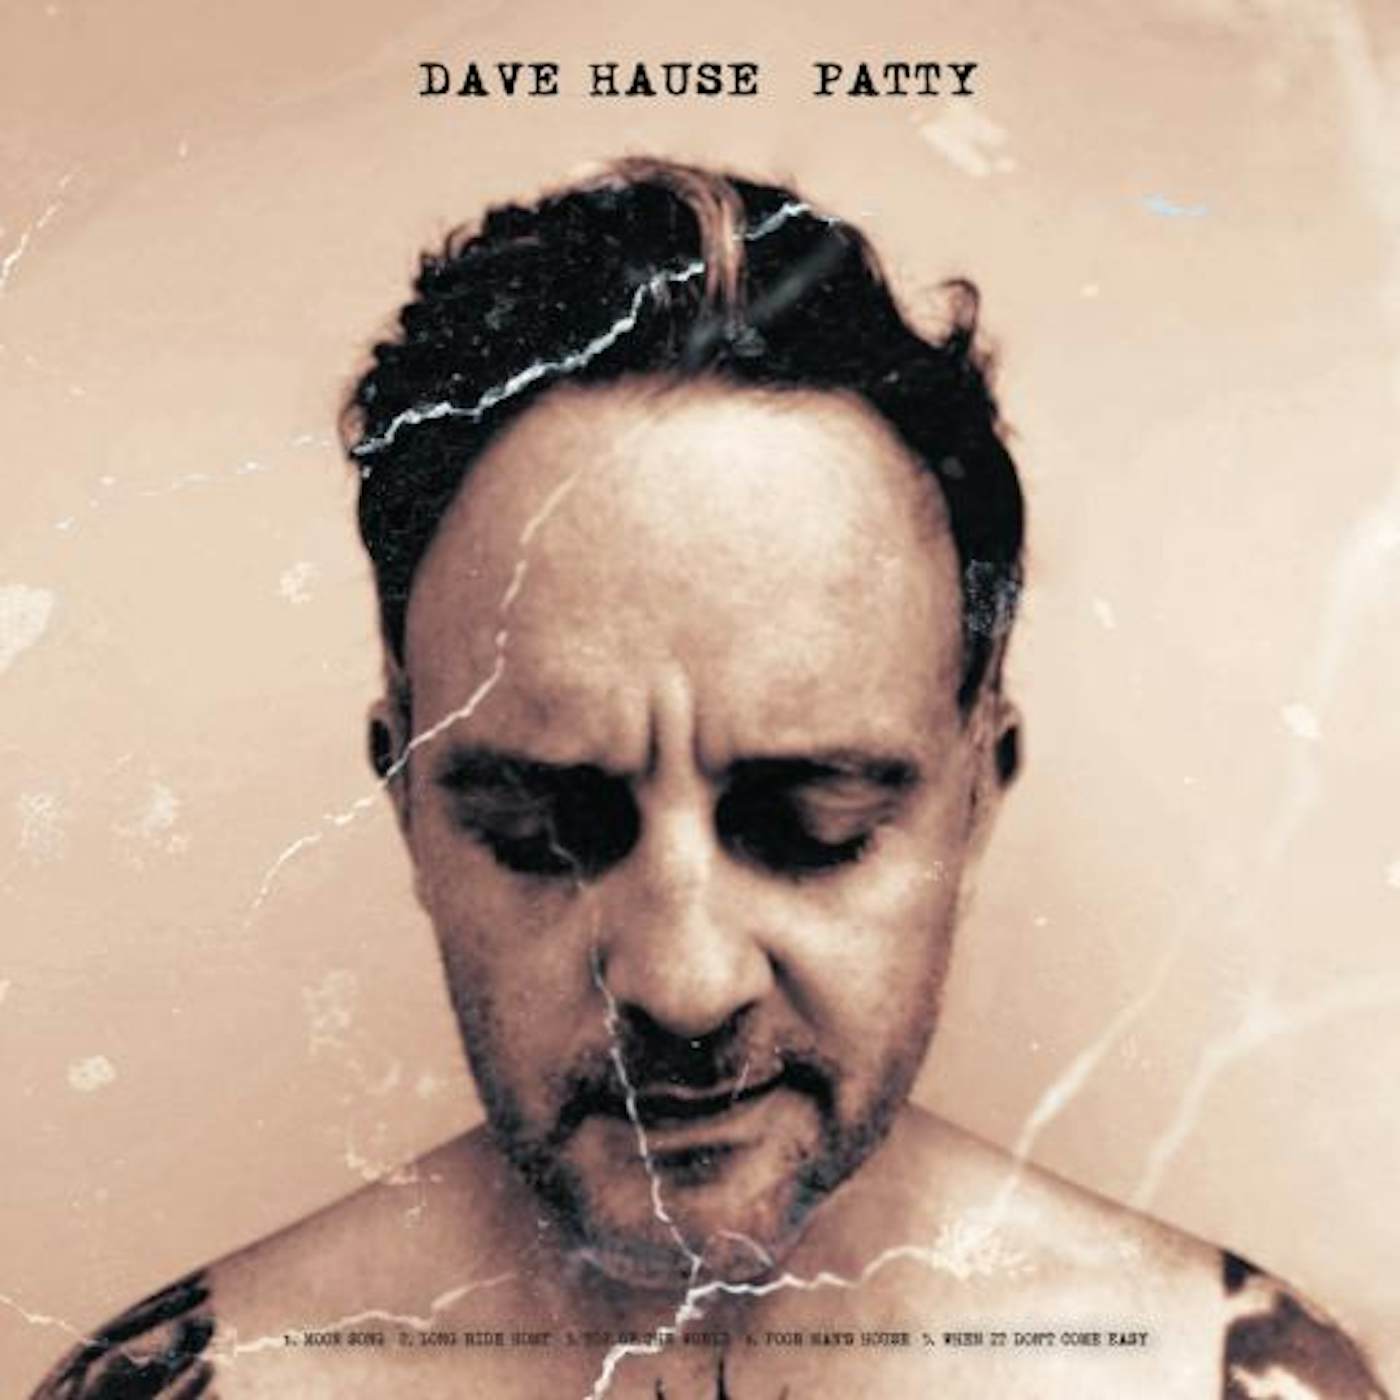 Dave Hause PATTY/PADDY CD